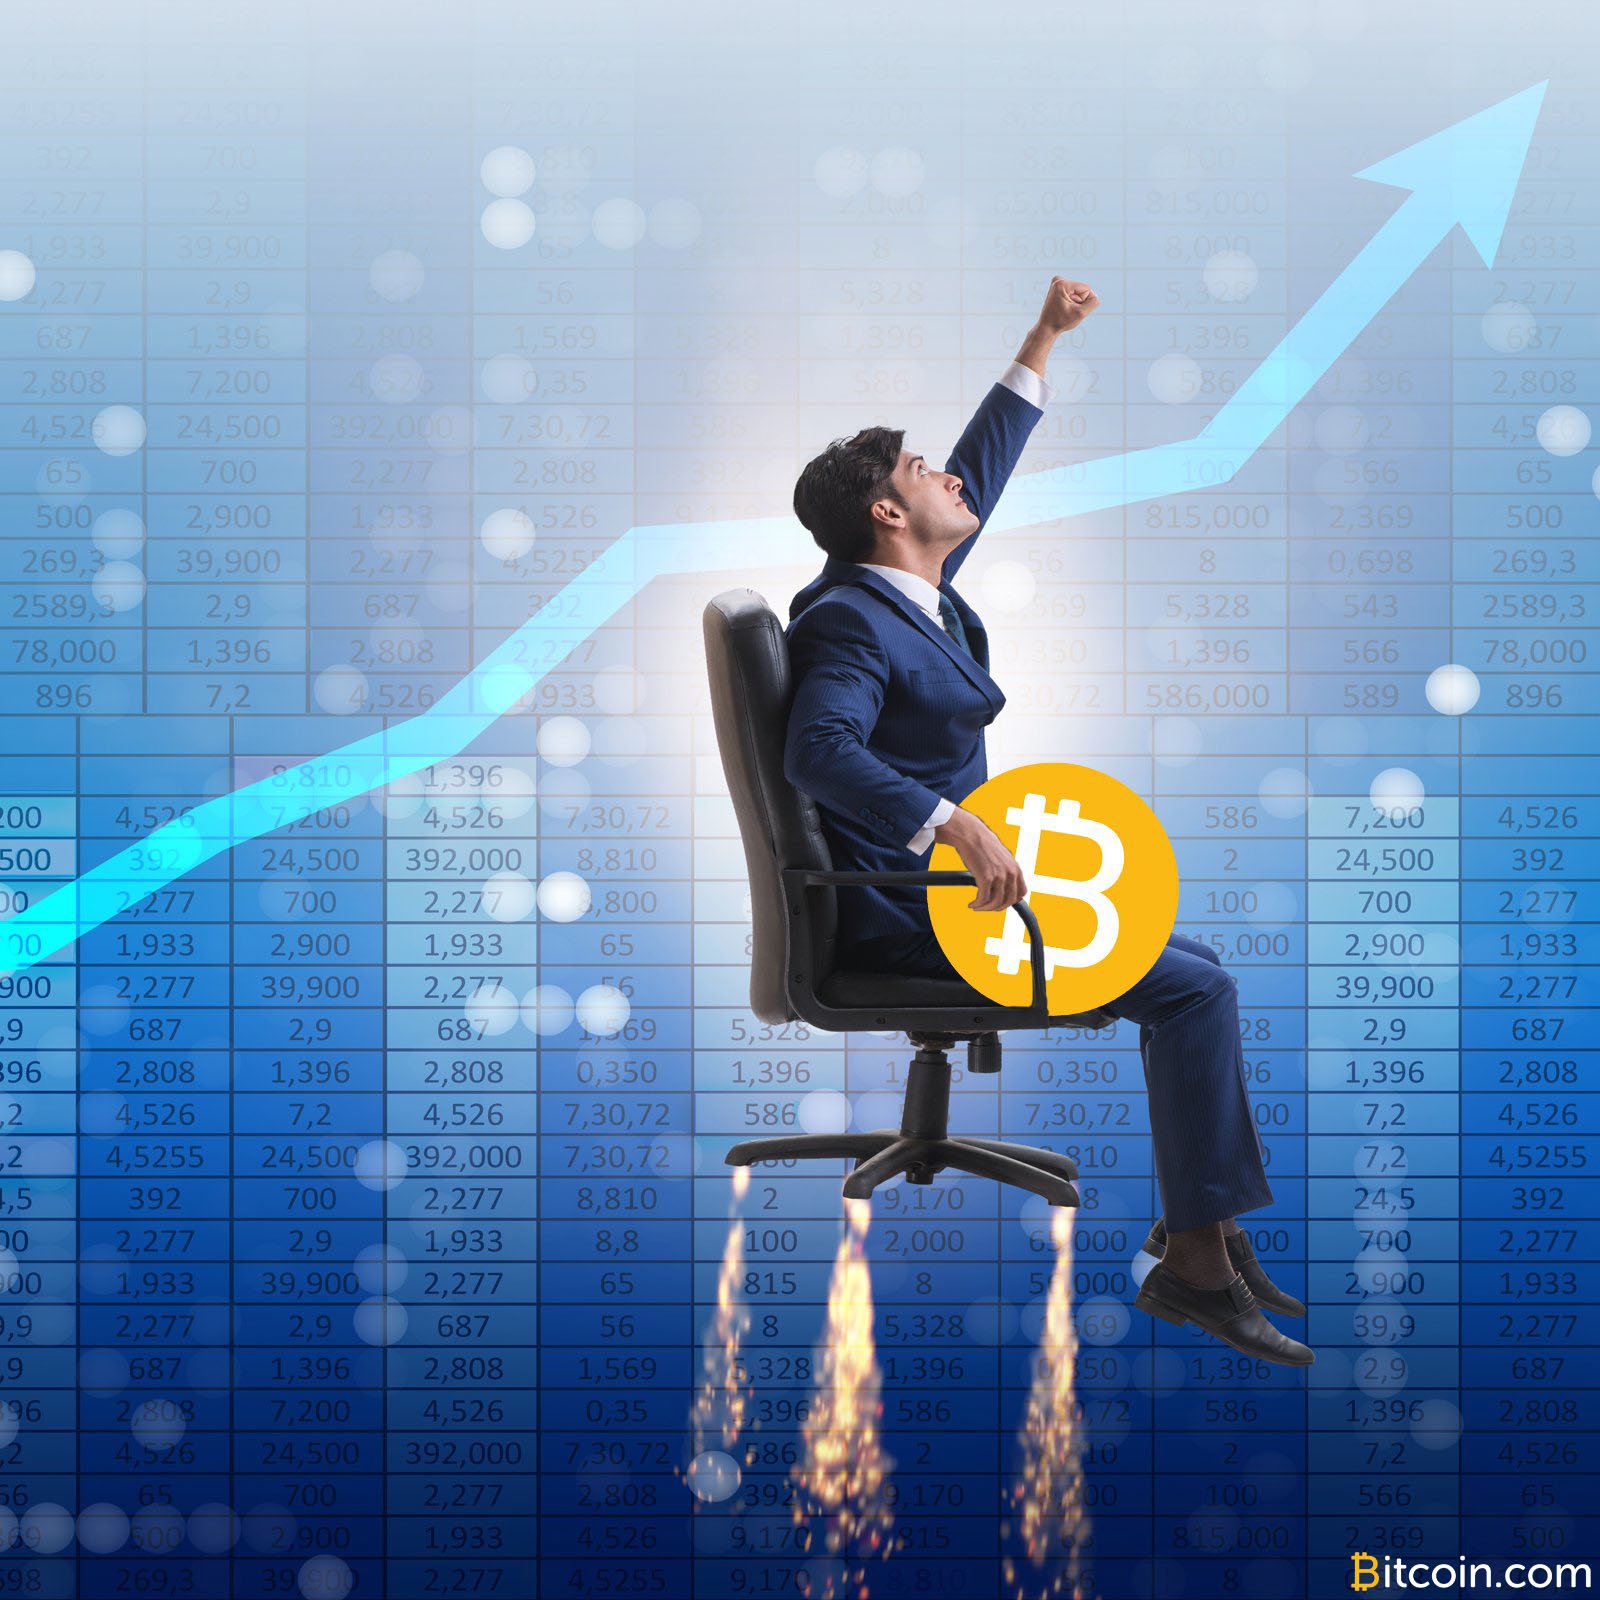 The Price of Bitcoin Exceeds $8K Across Global Exchanges